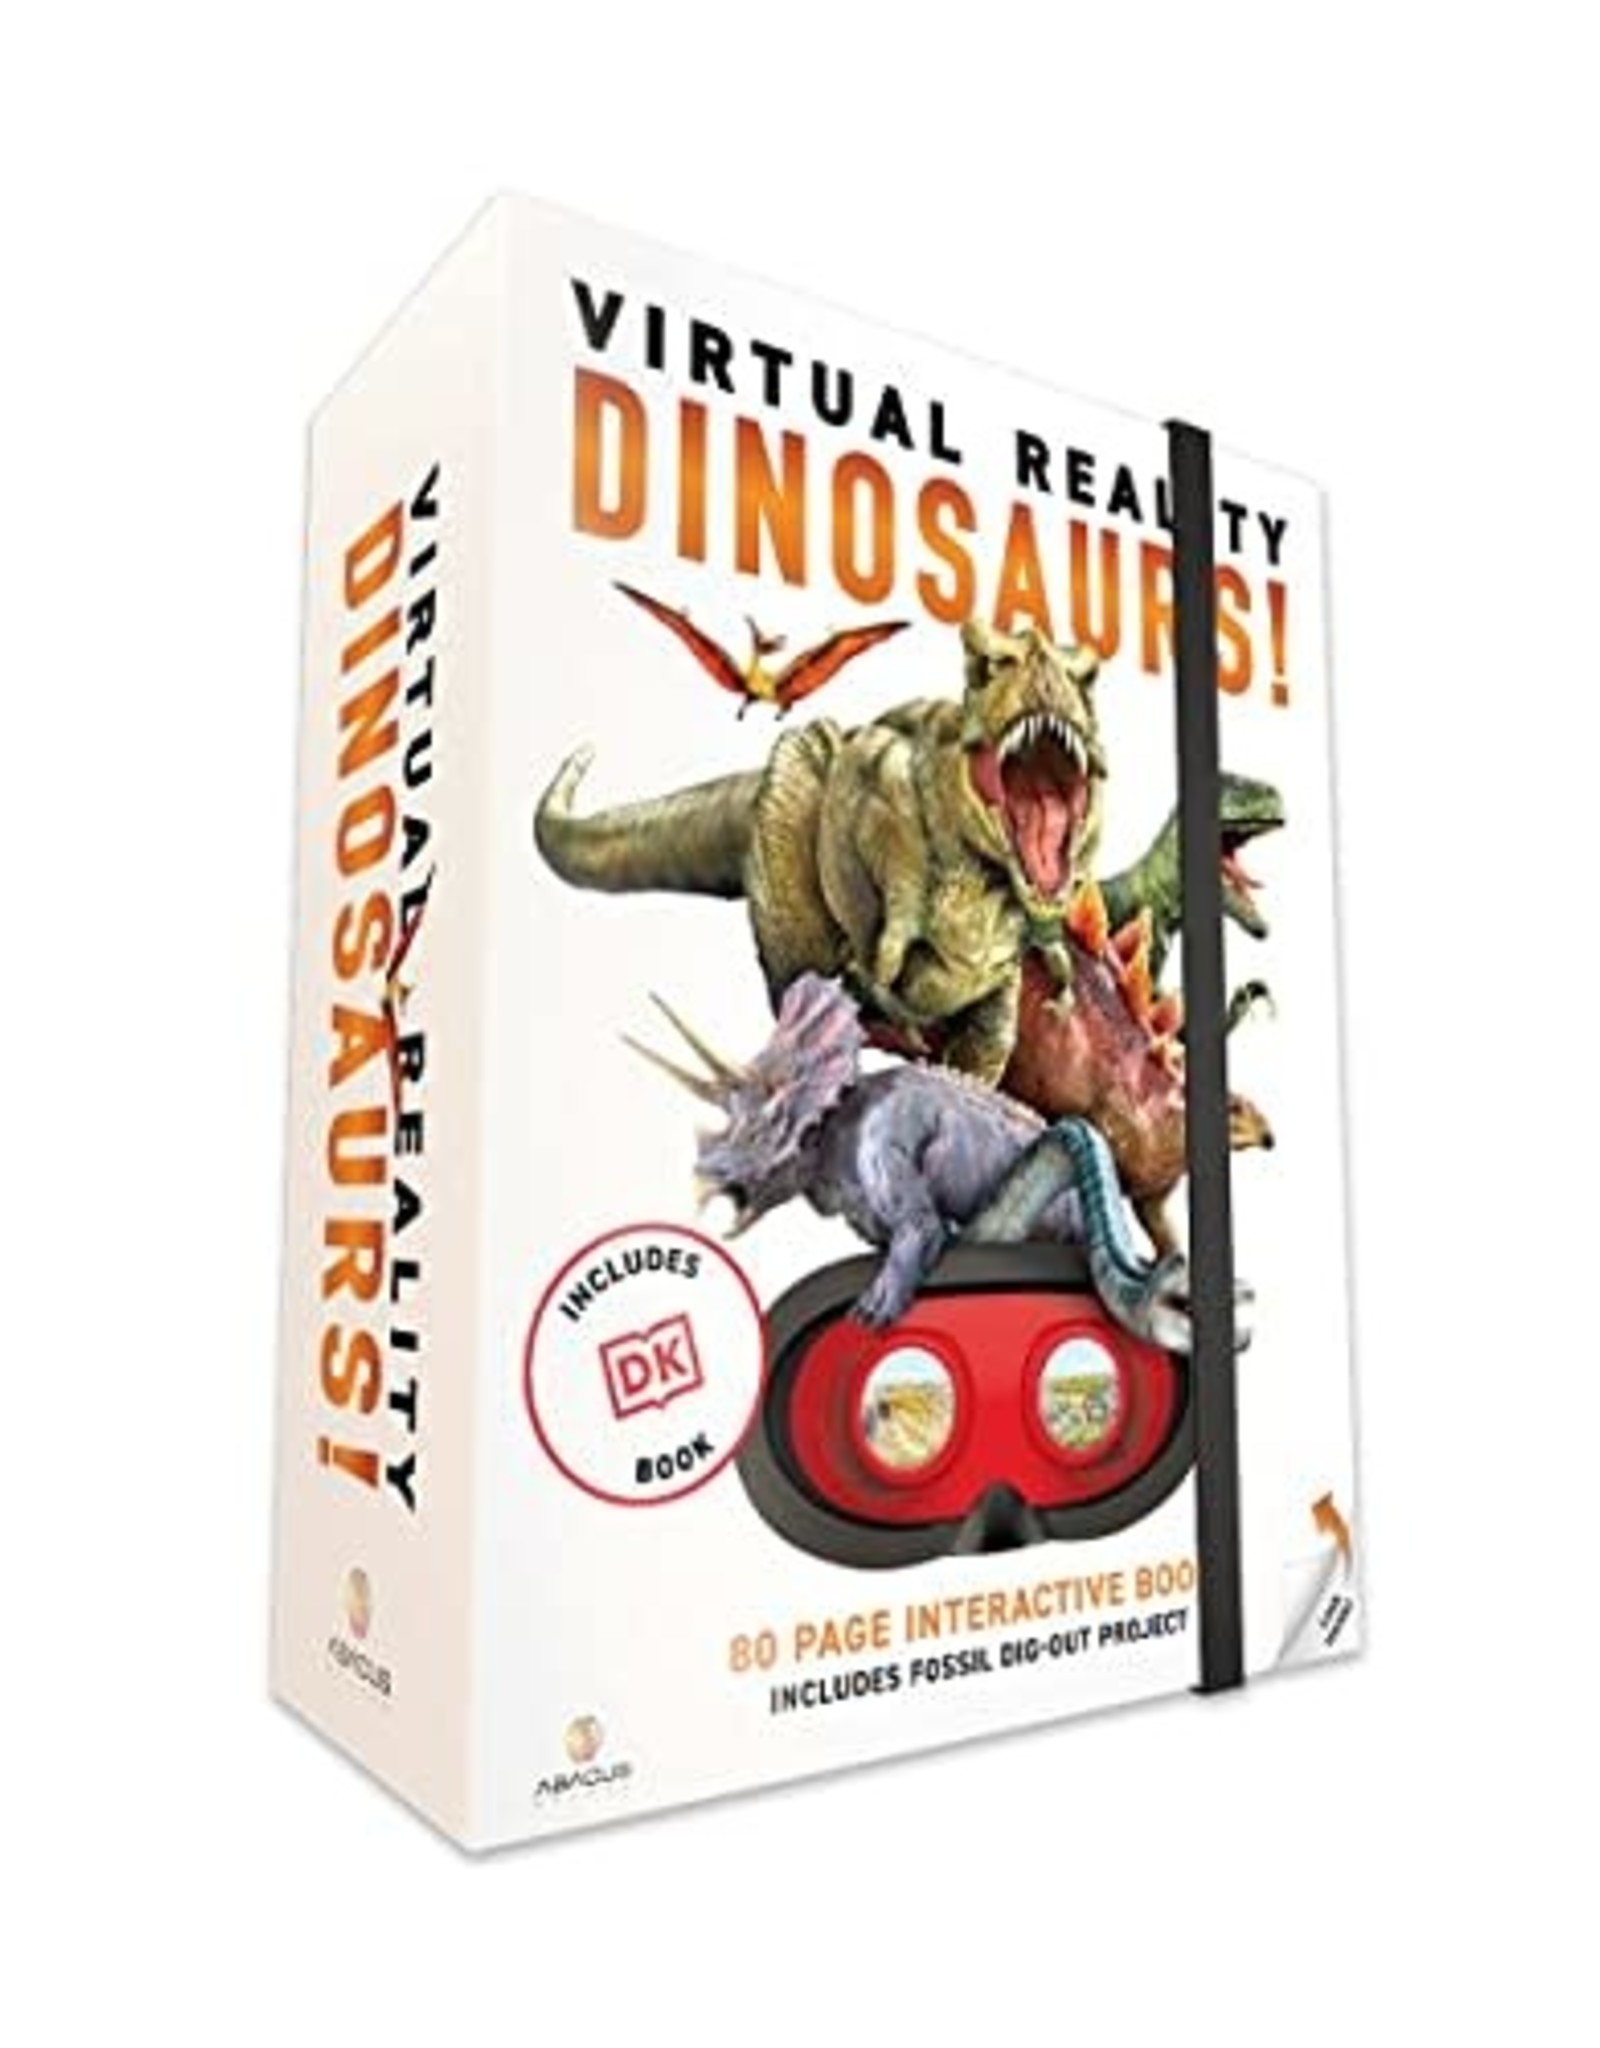 ABACUS BRANDS Virtual Reality Dinosaurs!